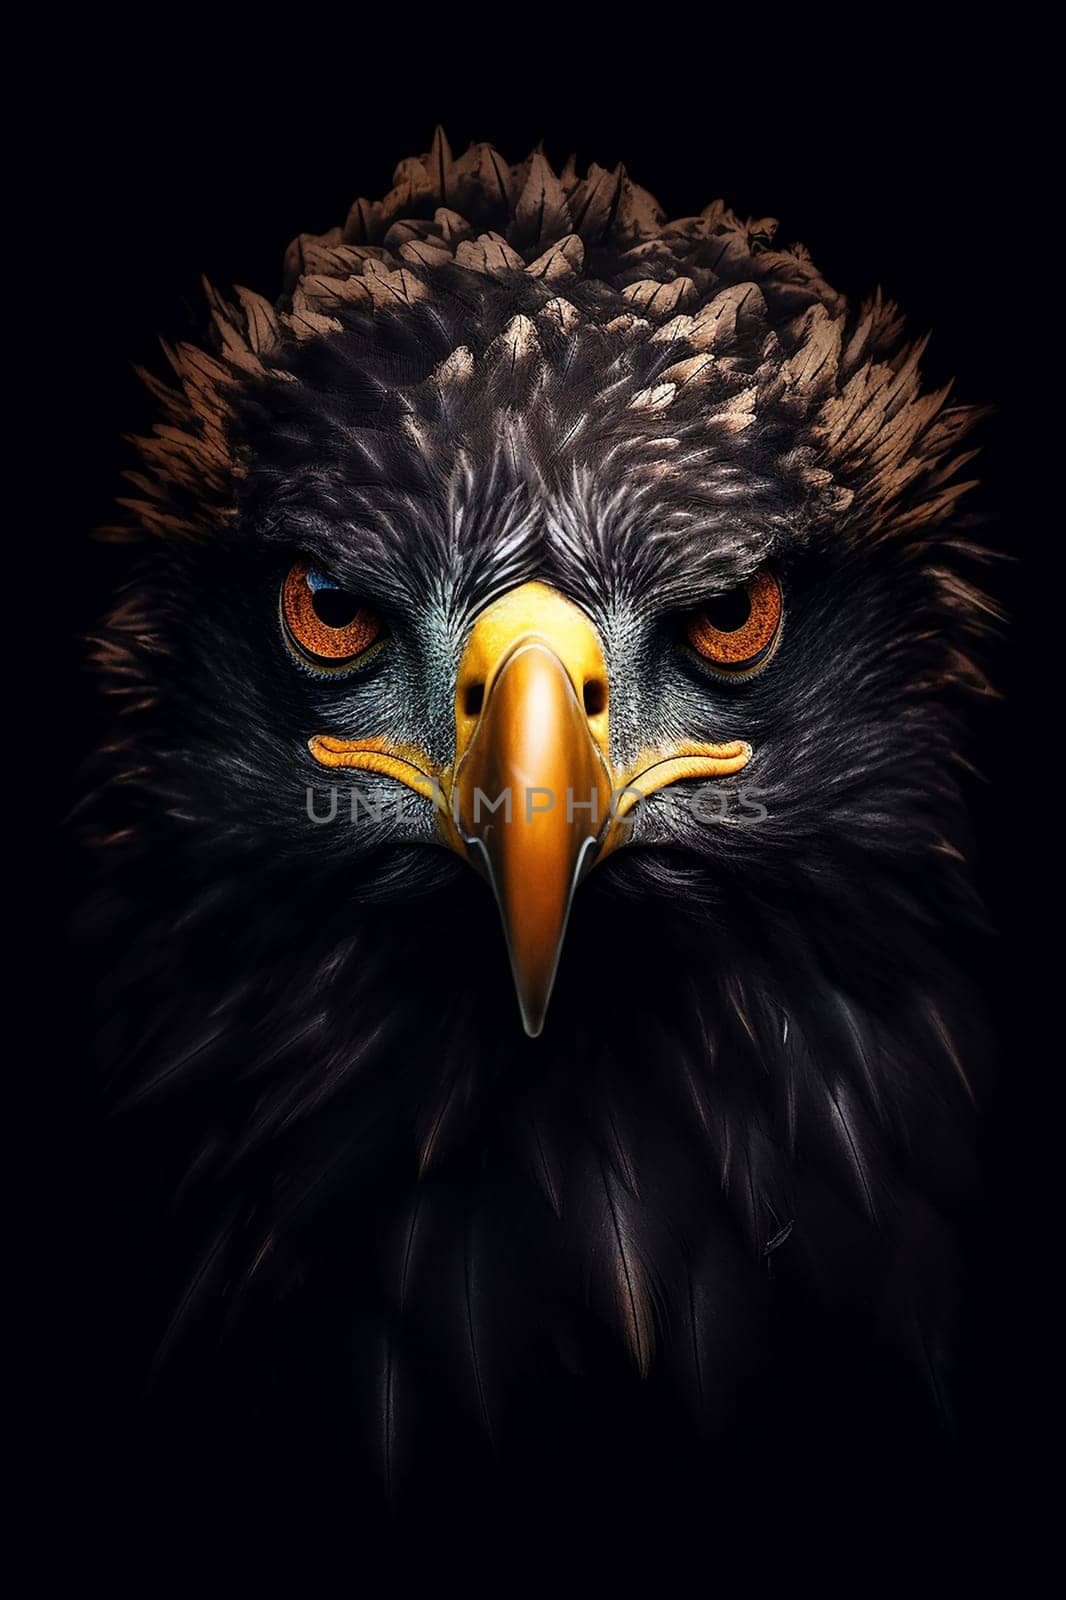 A Majestic american bald eagle closeup on black background